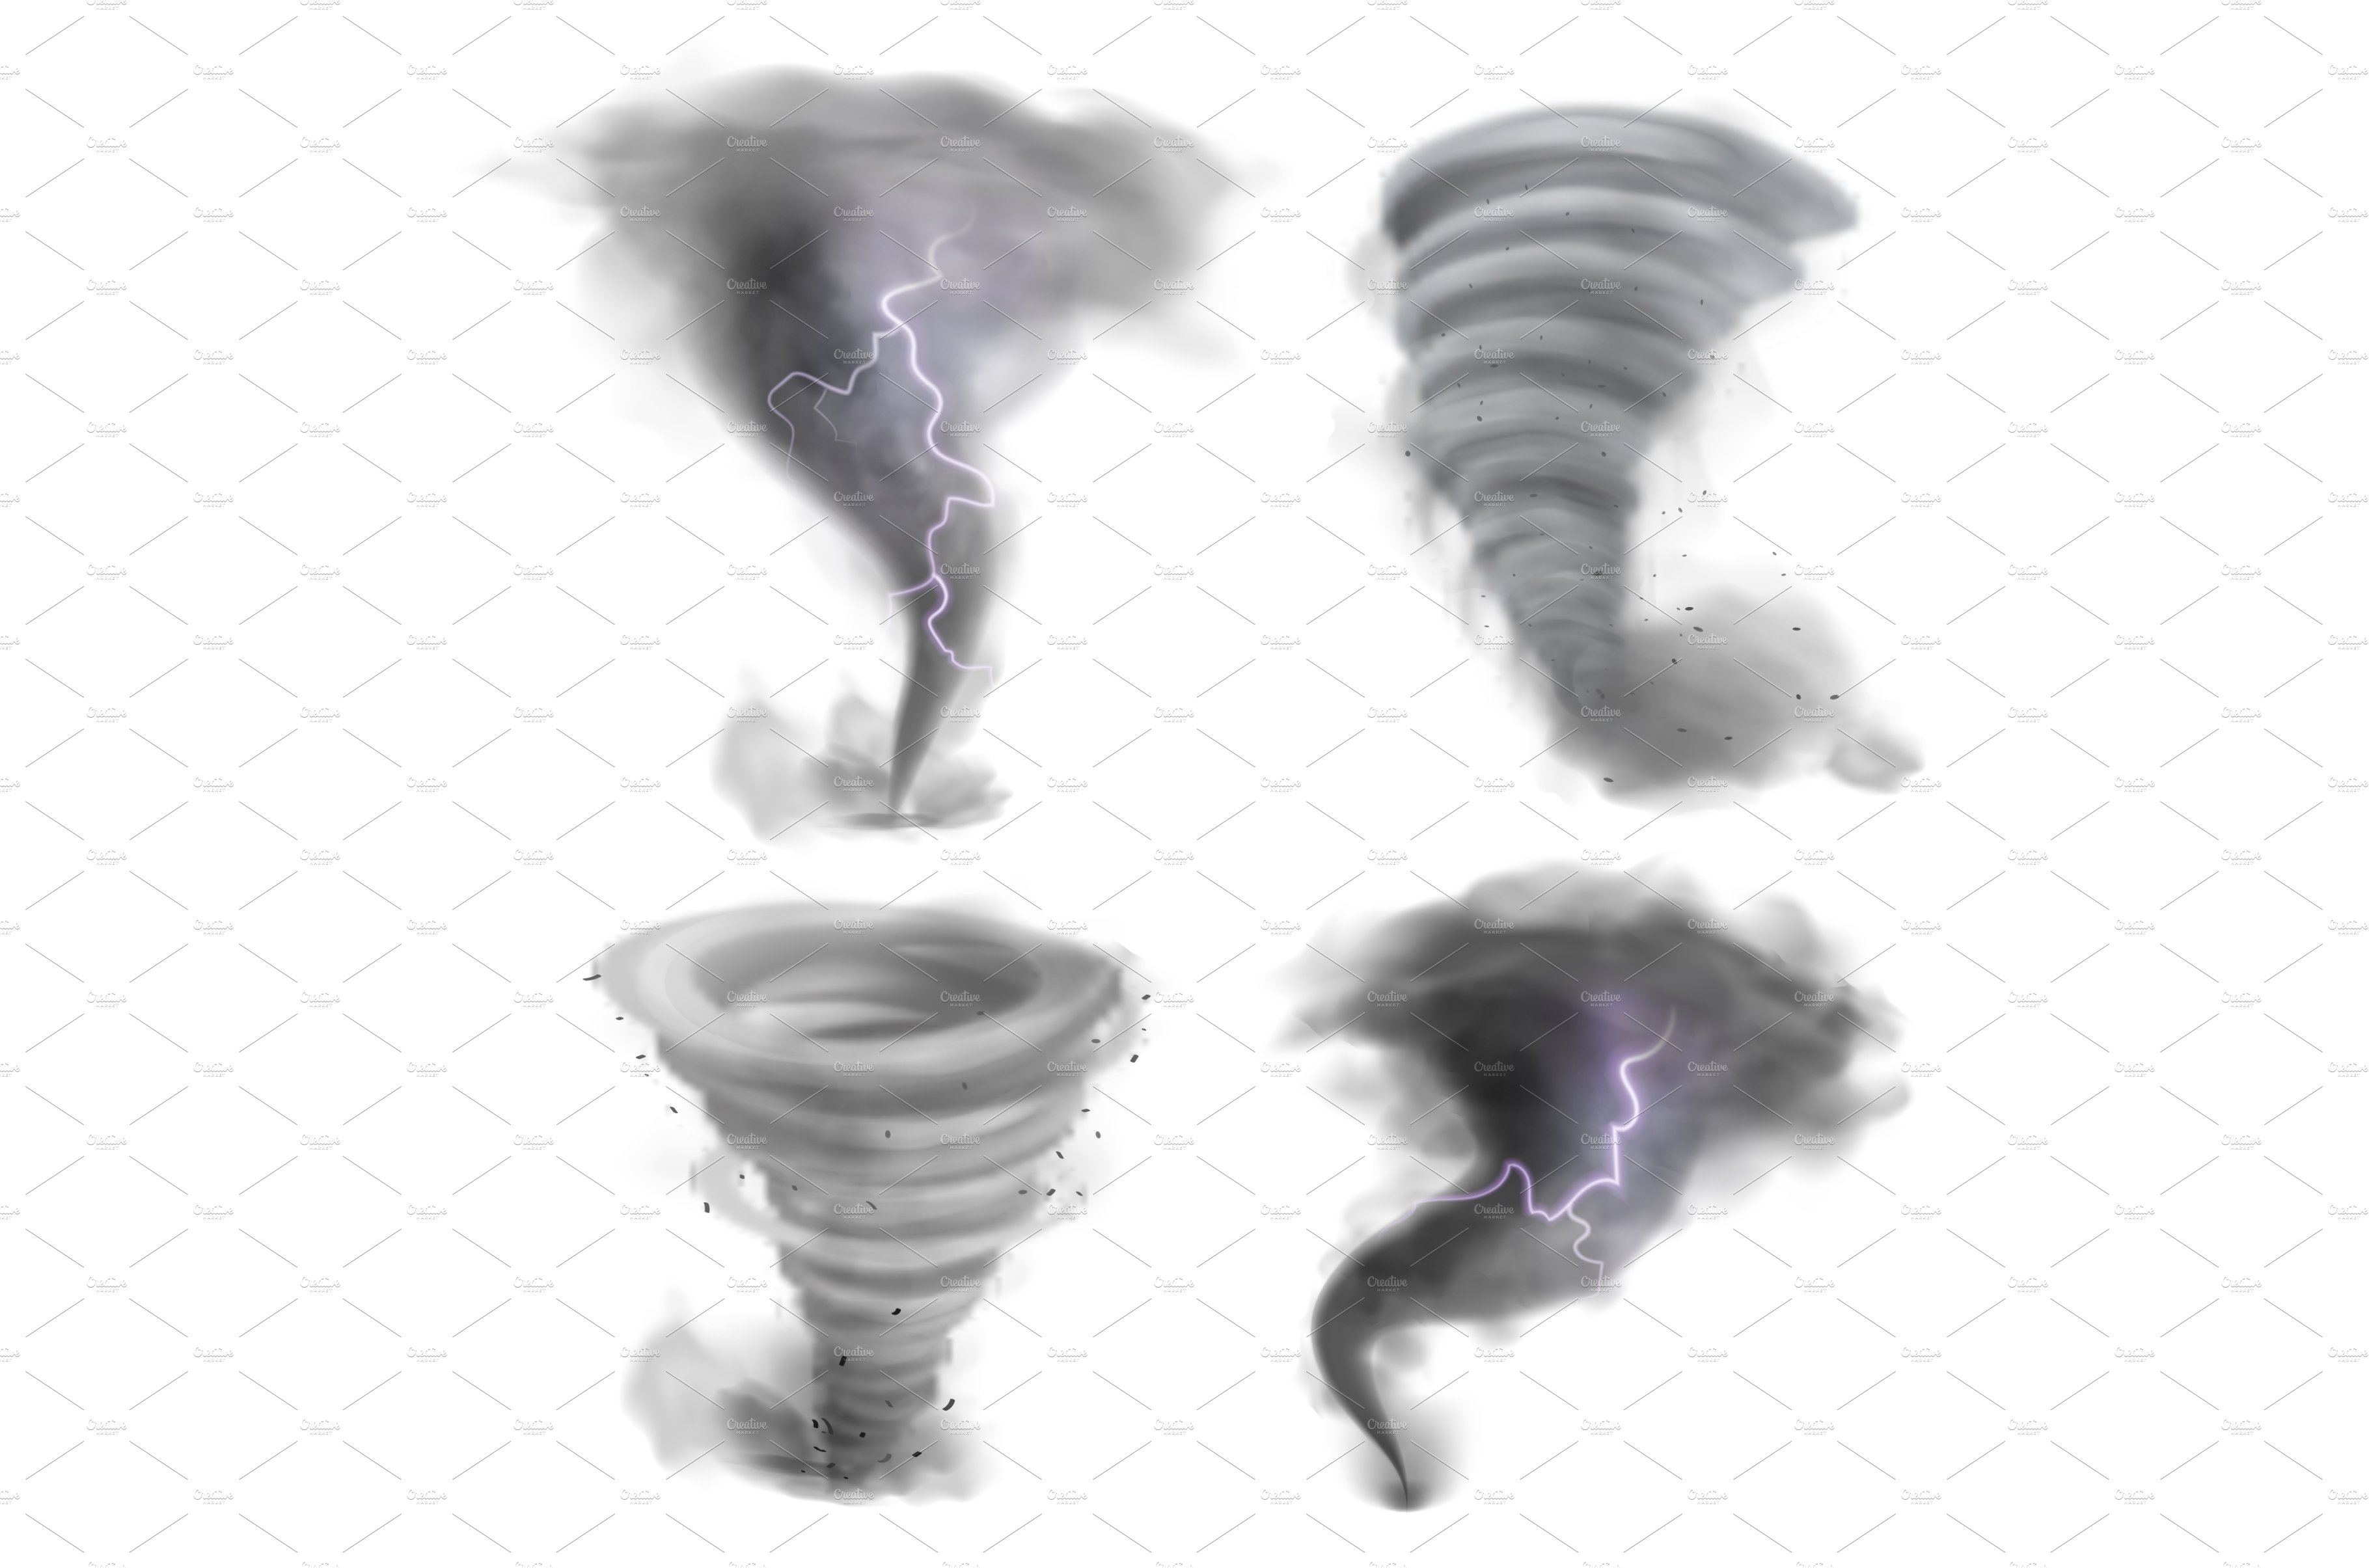 Hurricane vortex. Realistic tornado cover image.